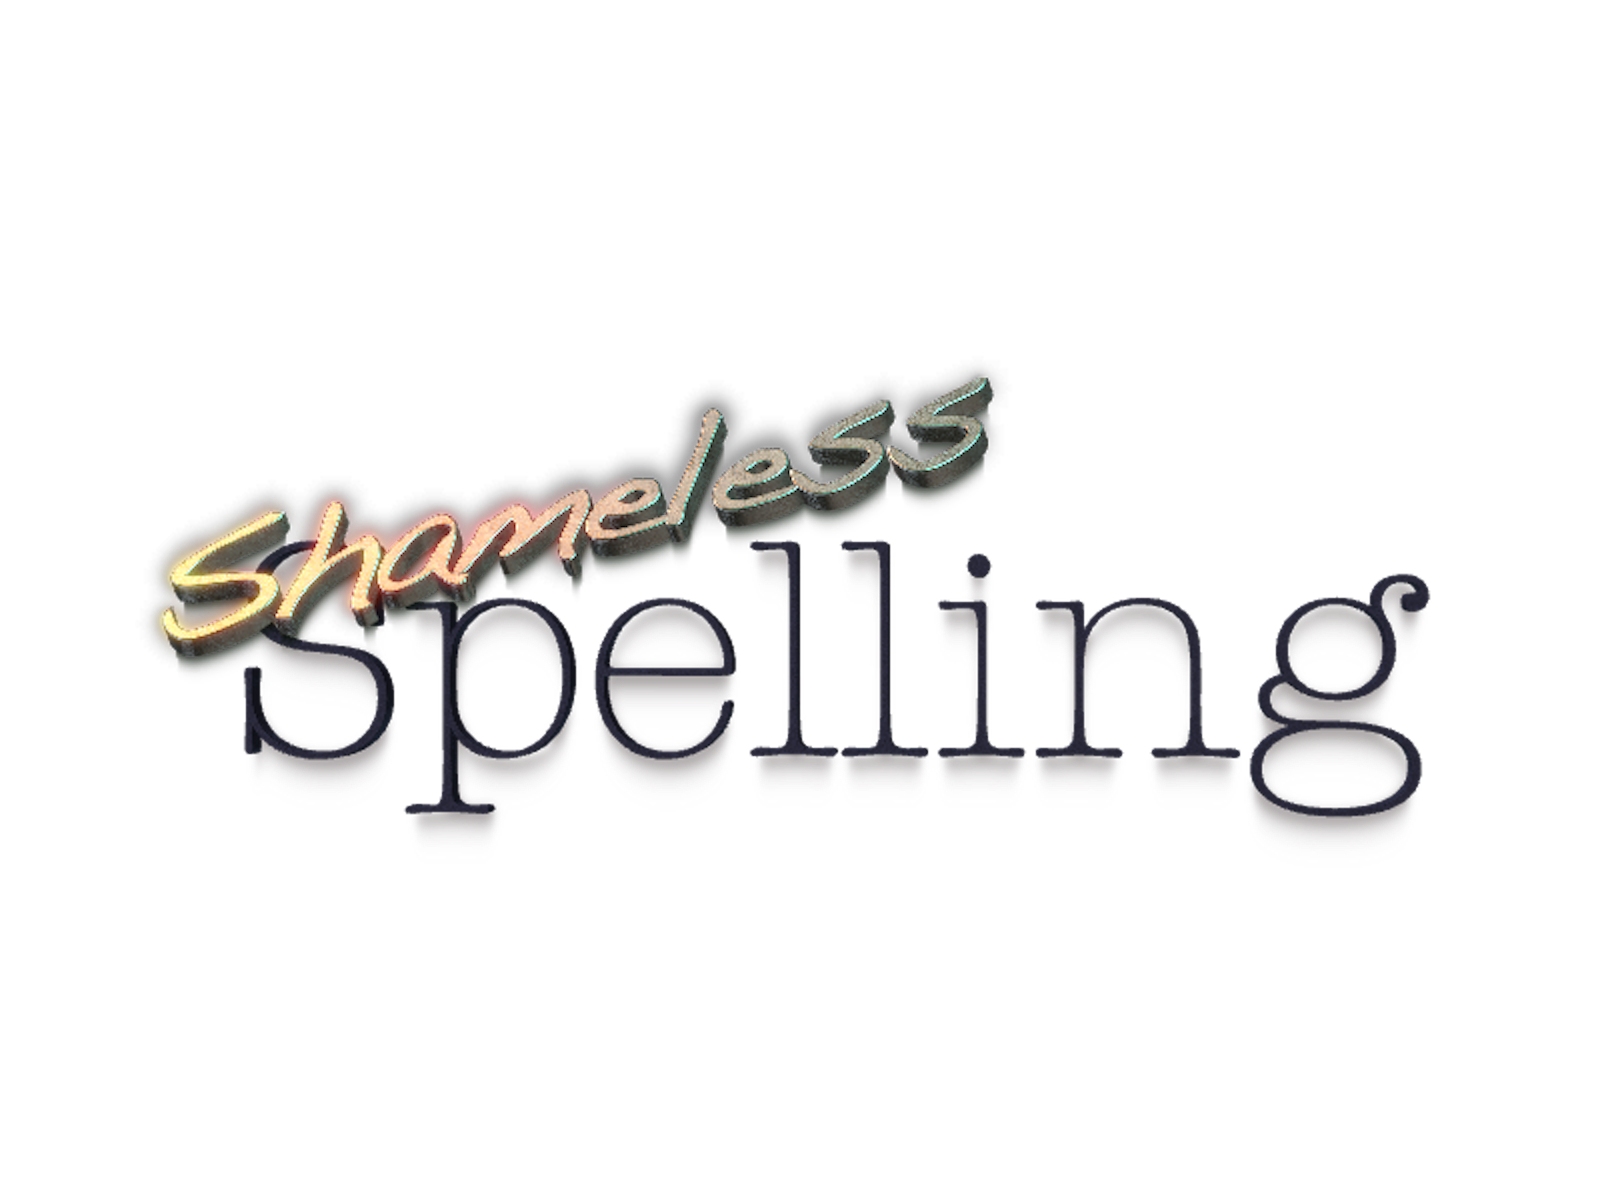 Welcome to Shameless Spelling